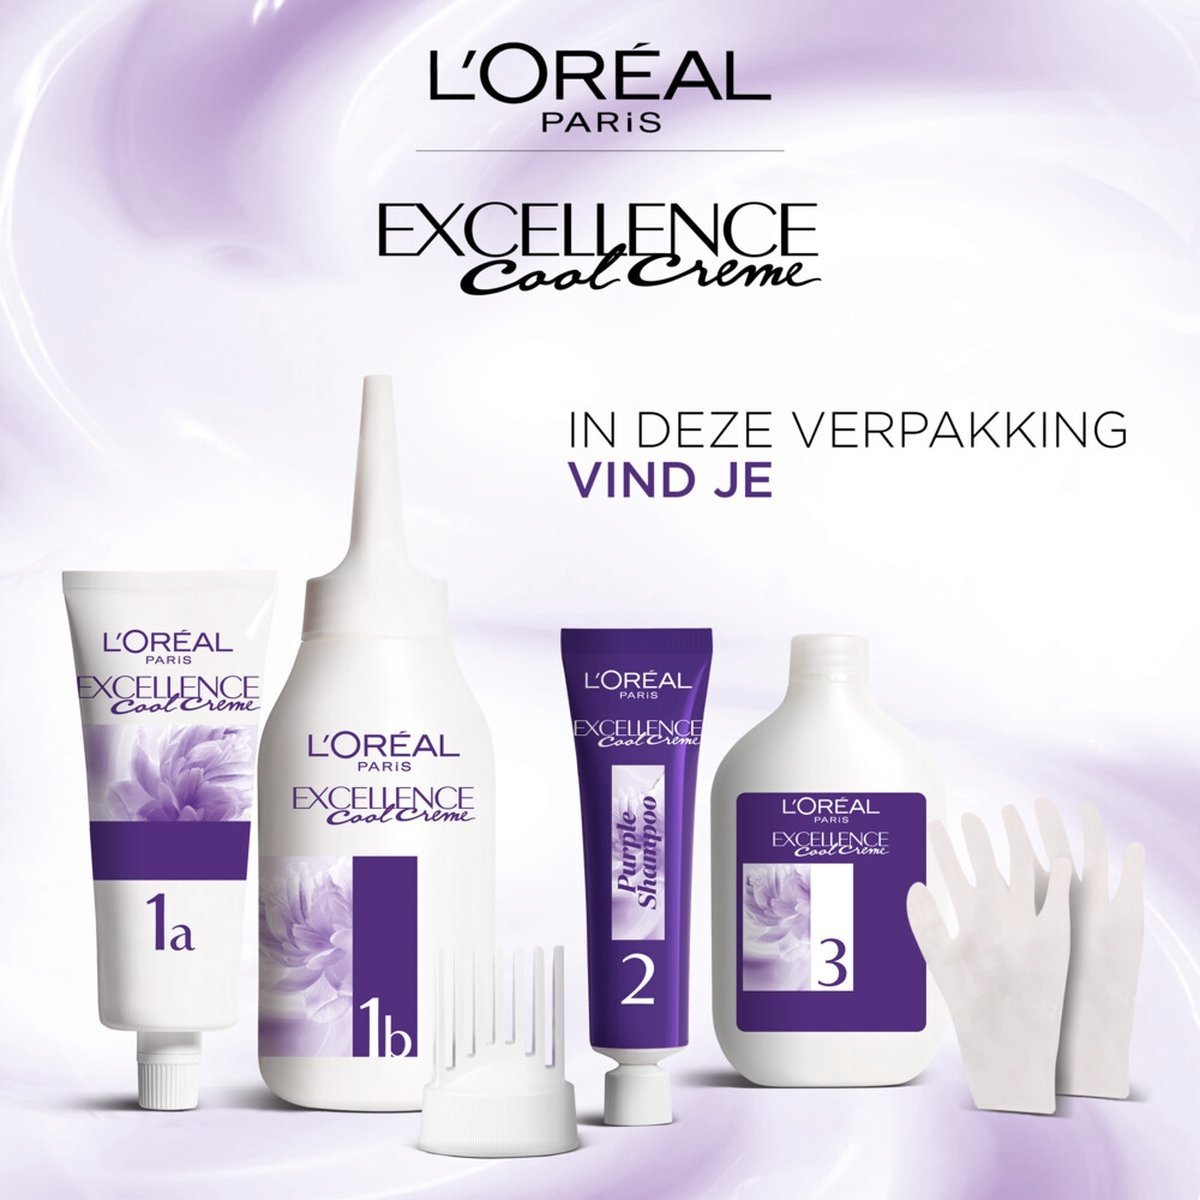 L'Oréal Excellence Cool Cream 8.11 - Ultra Ash Light Blonde - Packaging damaged